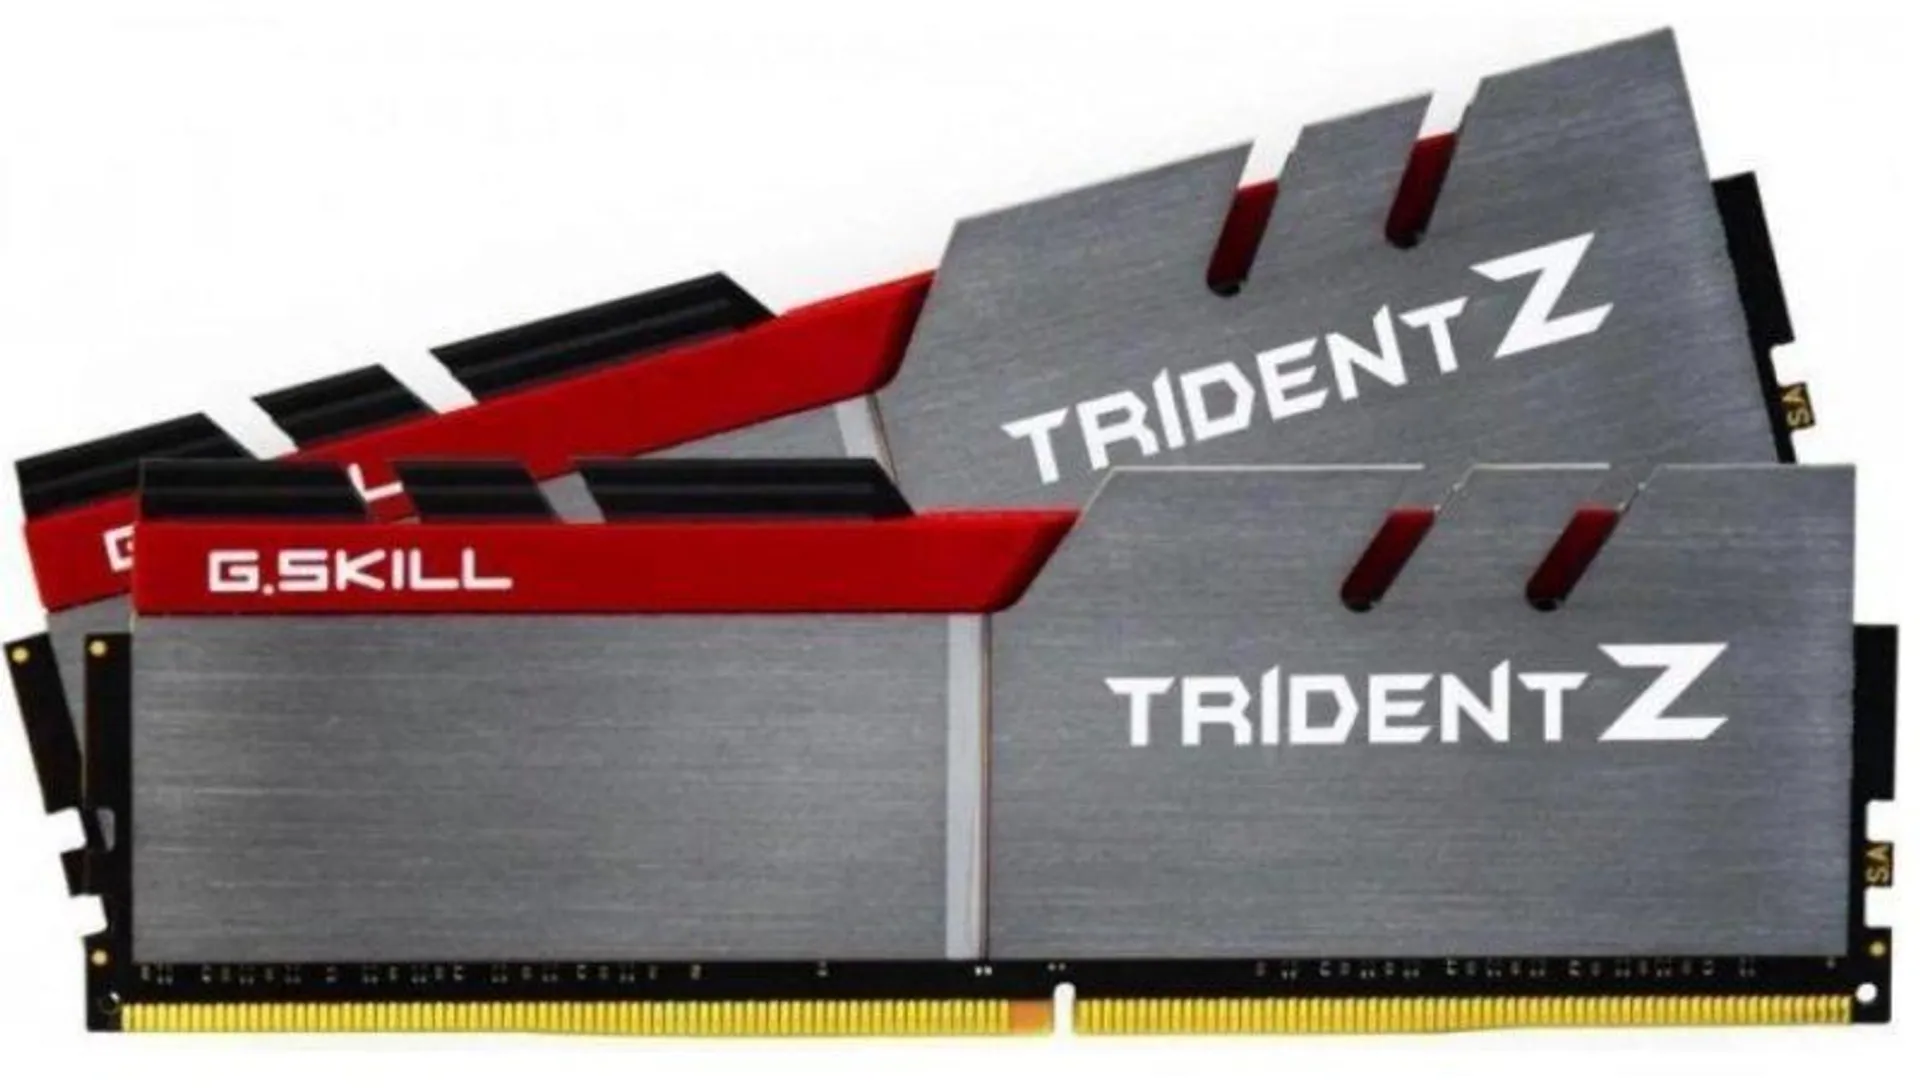 G.Skill Trident Z 16GB Kit DDR4 3200MHz RAM